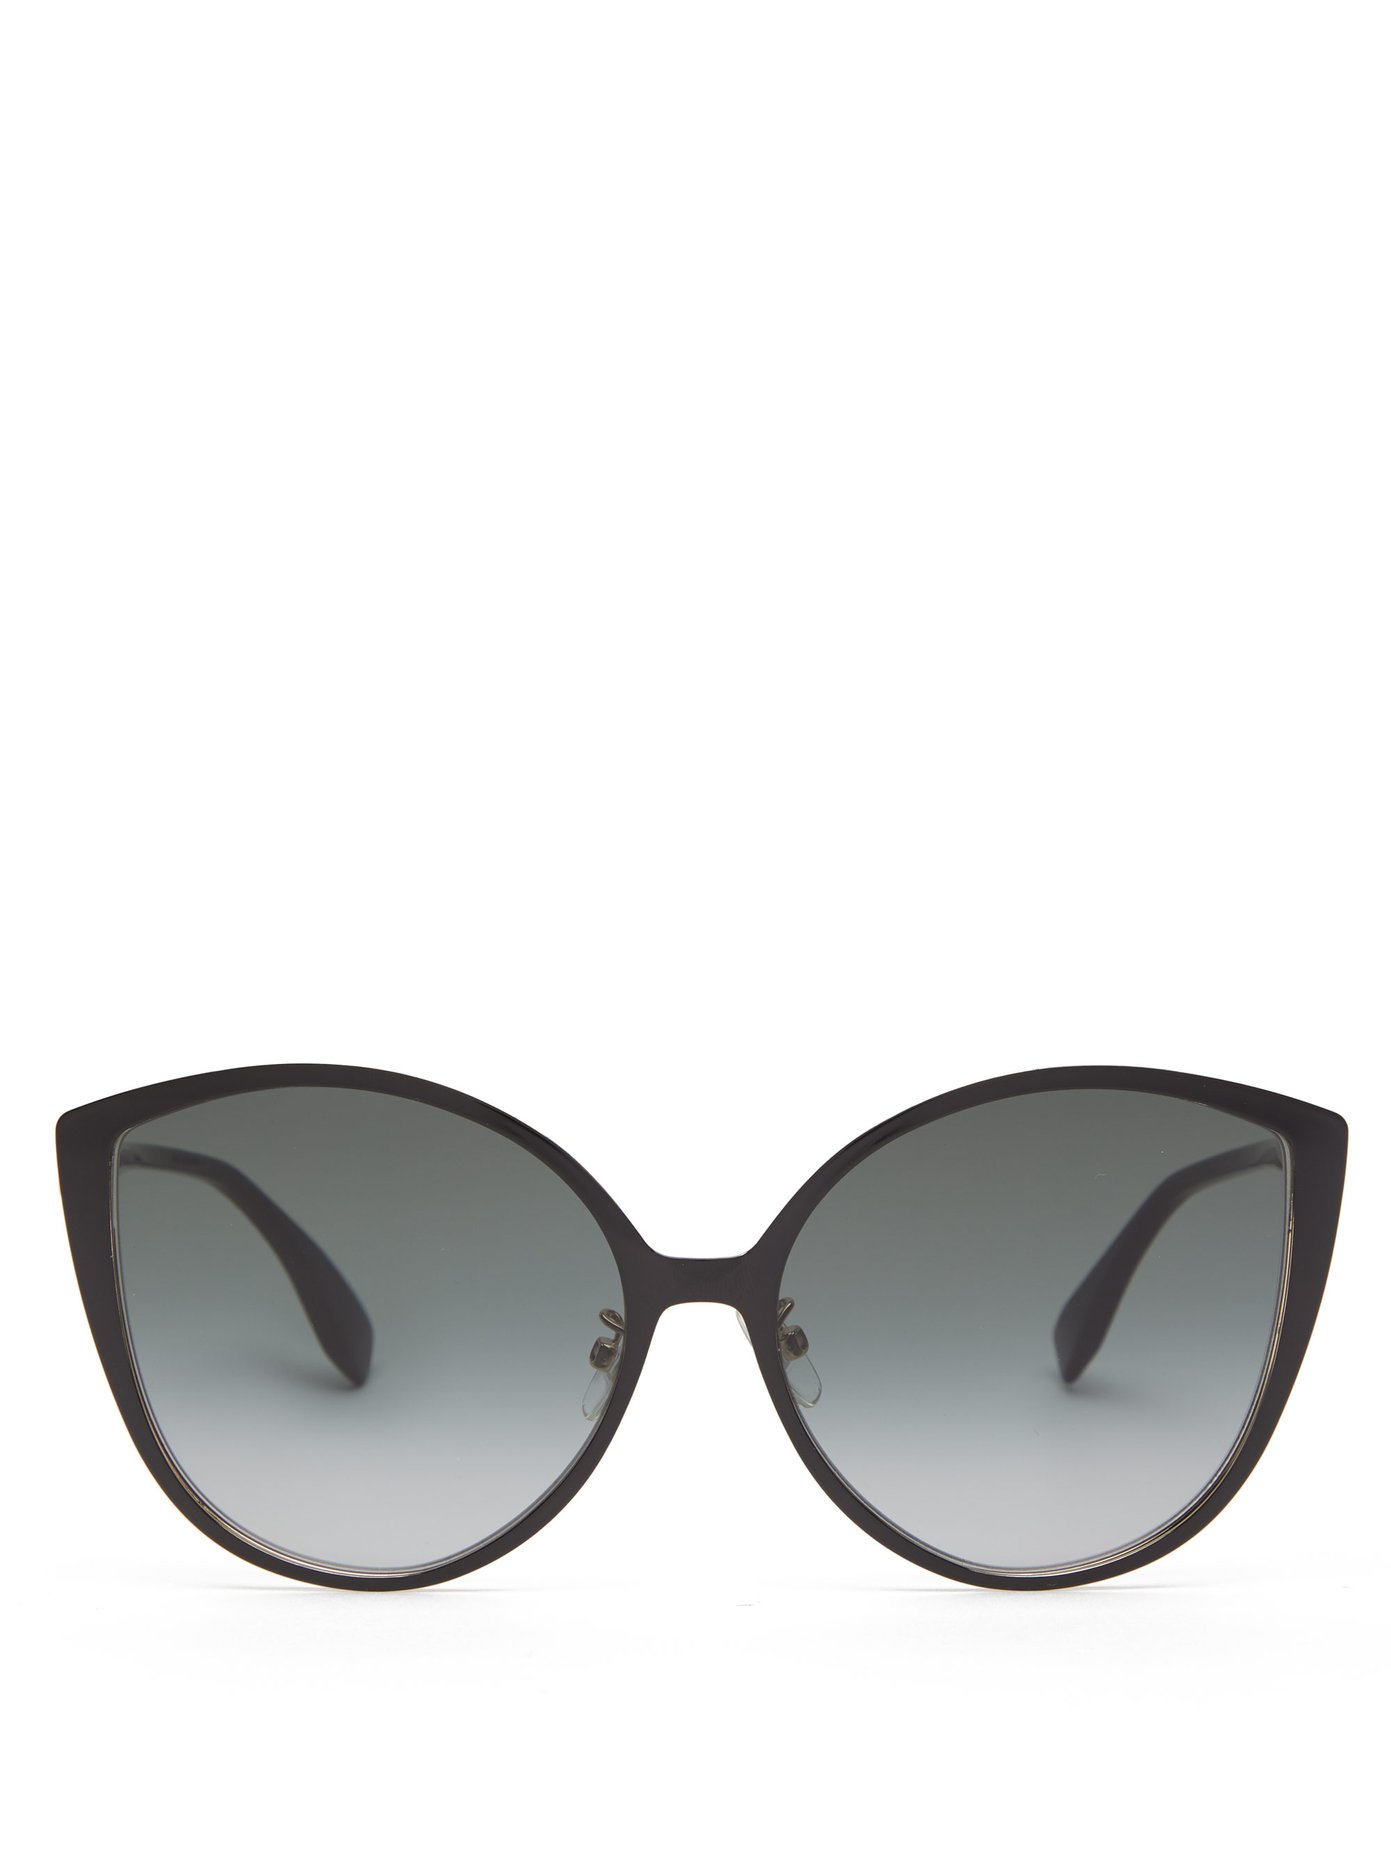 fendi cat eye sunglasses black